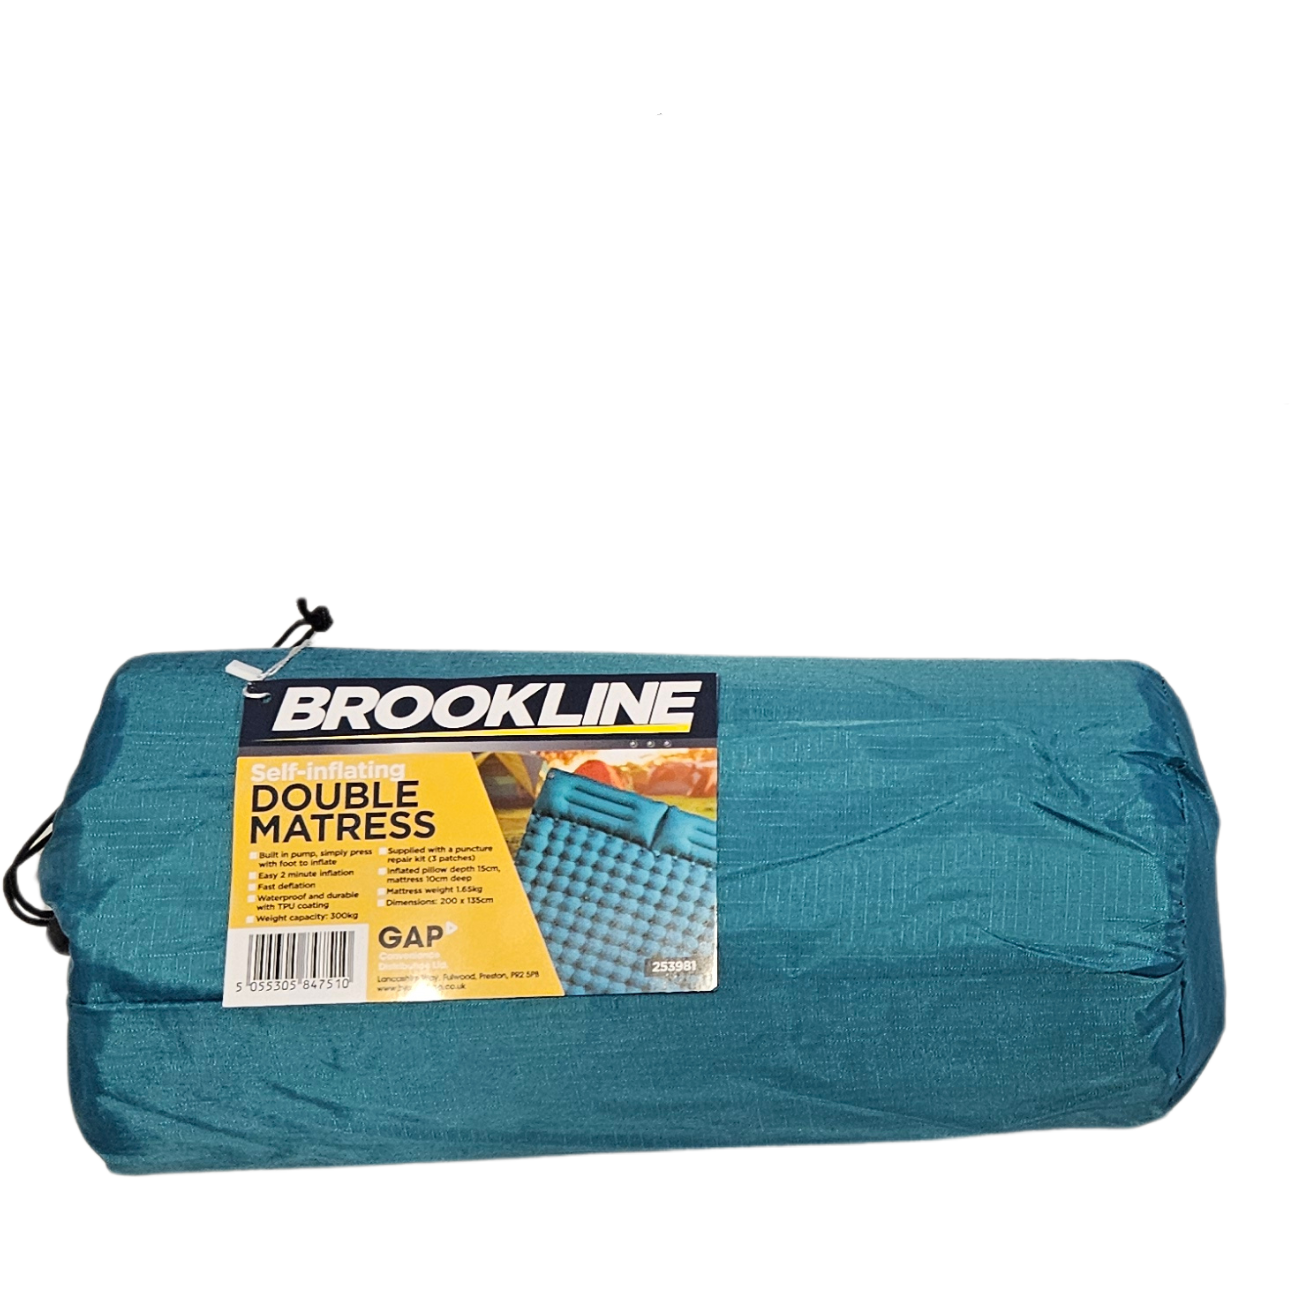 Brookline Double Self-Inflating Mattress